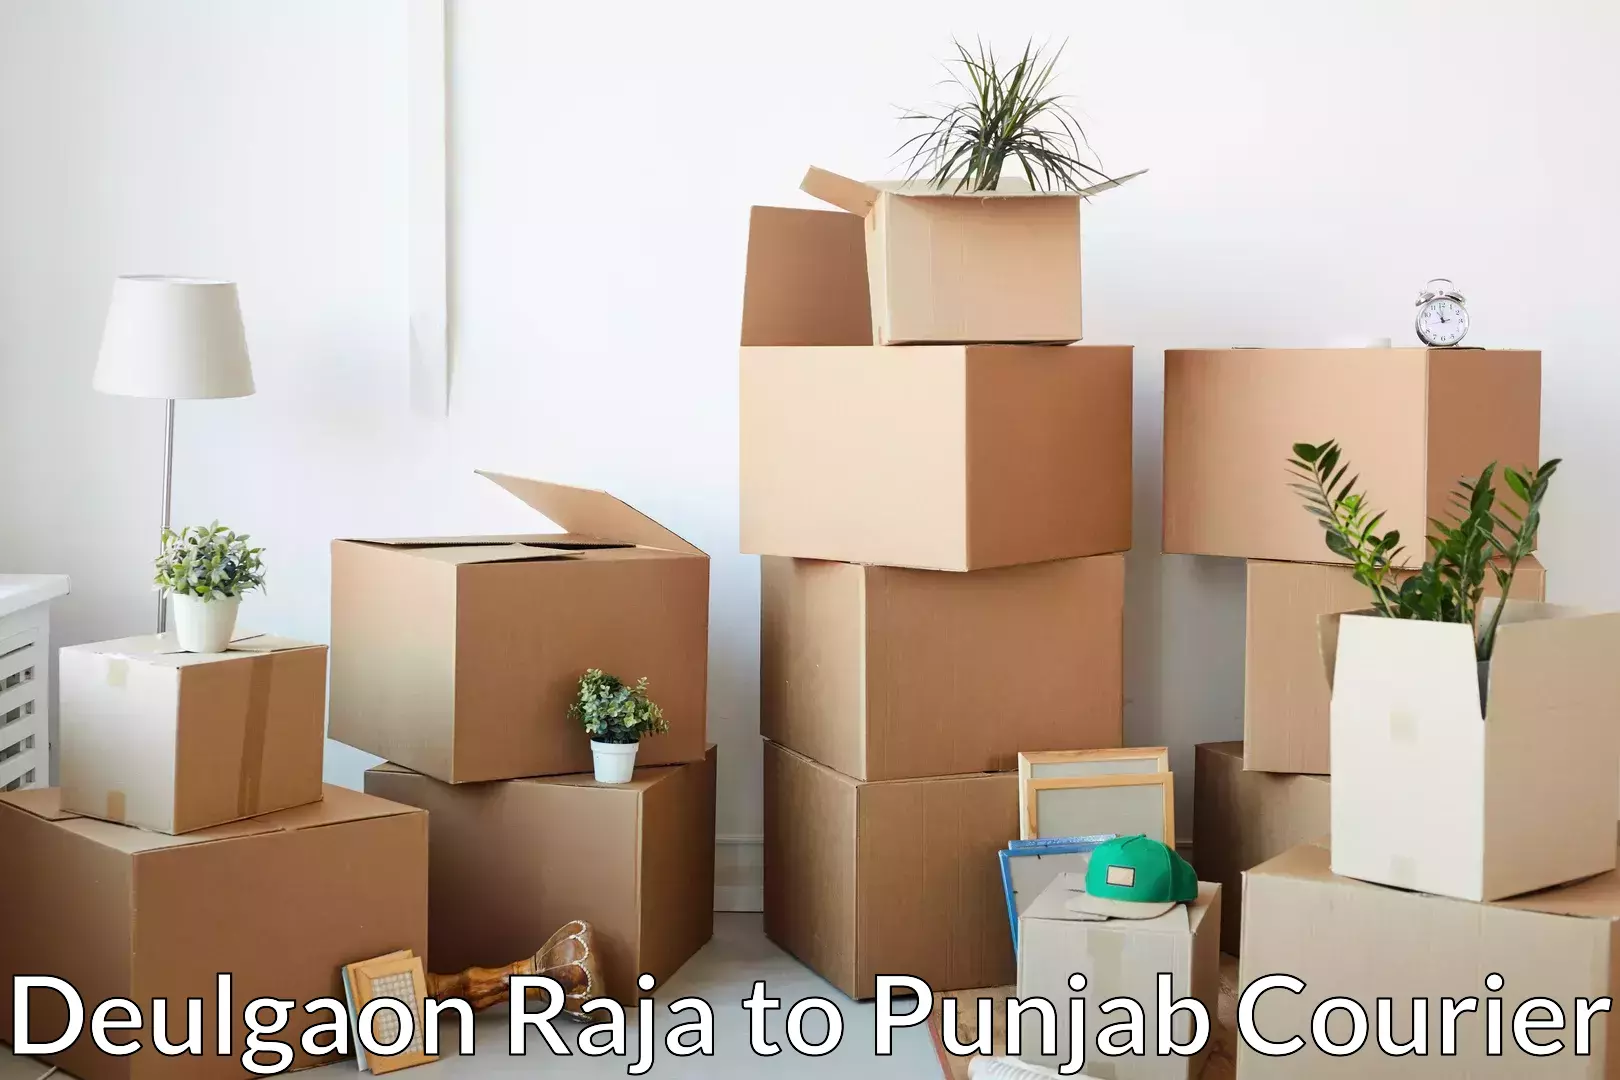 Professional moving company Deulgaon Raja to Punjab